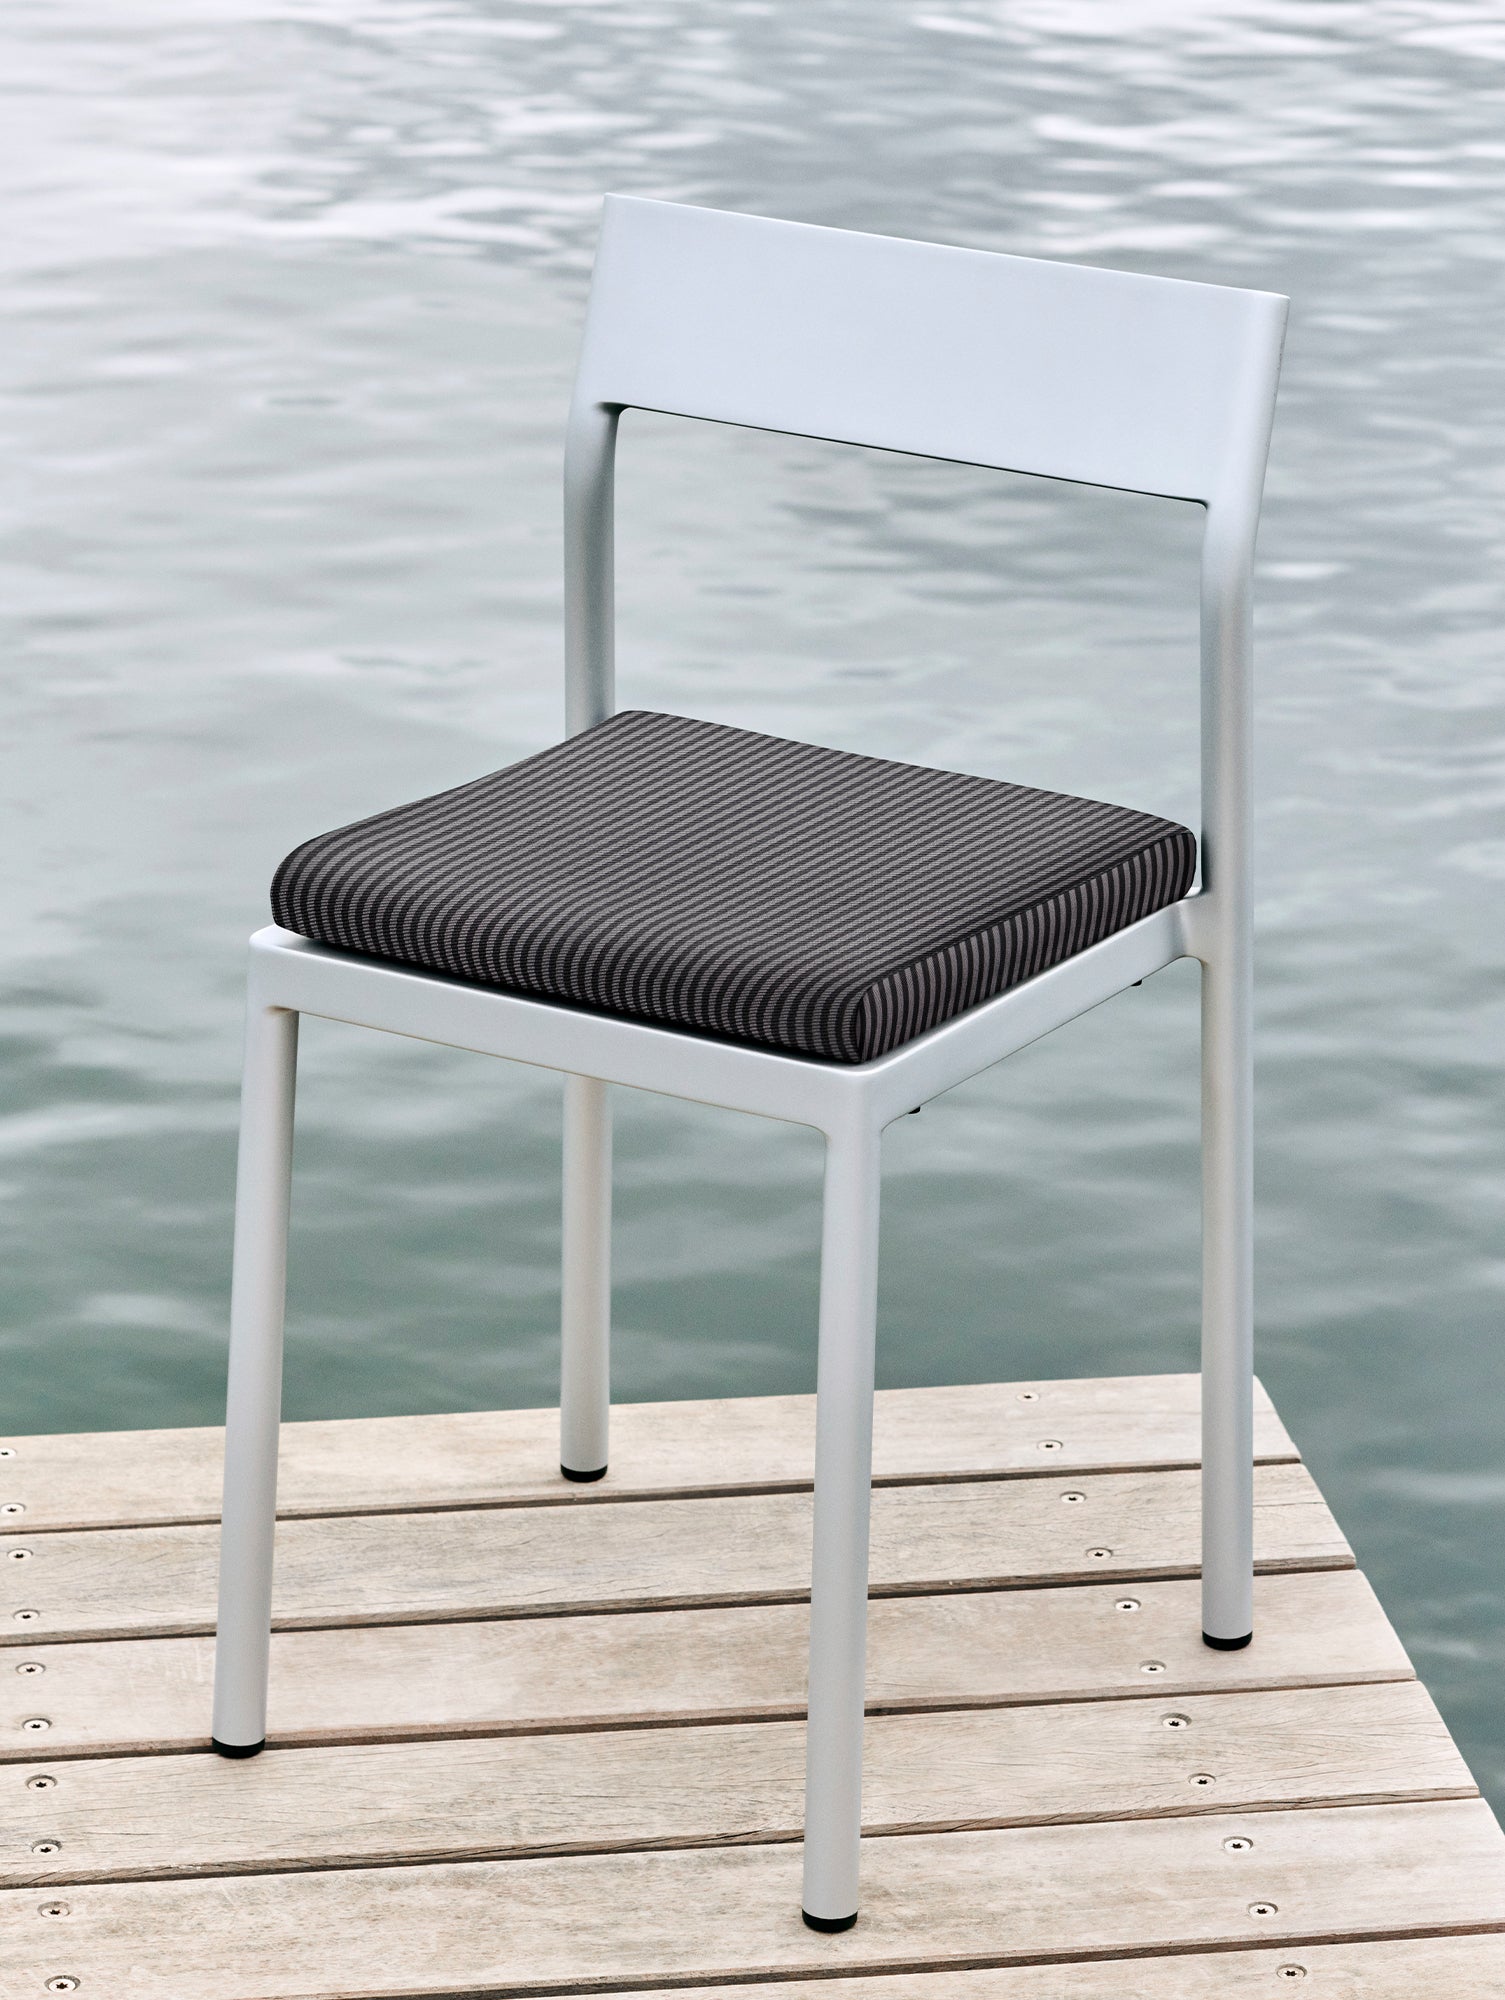 Type Chair Seat Cushion by HAY - Grey Black Stripe